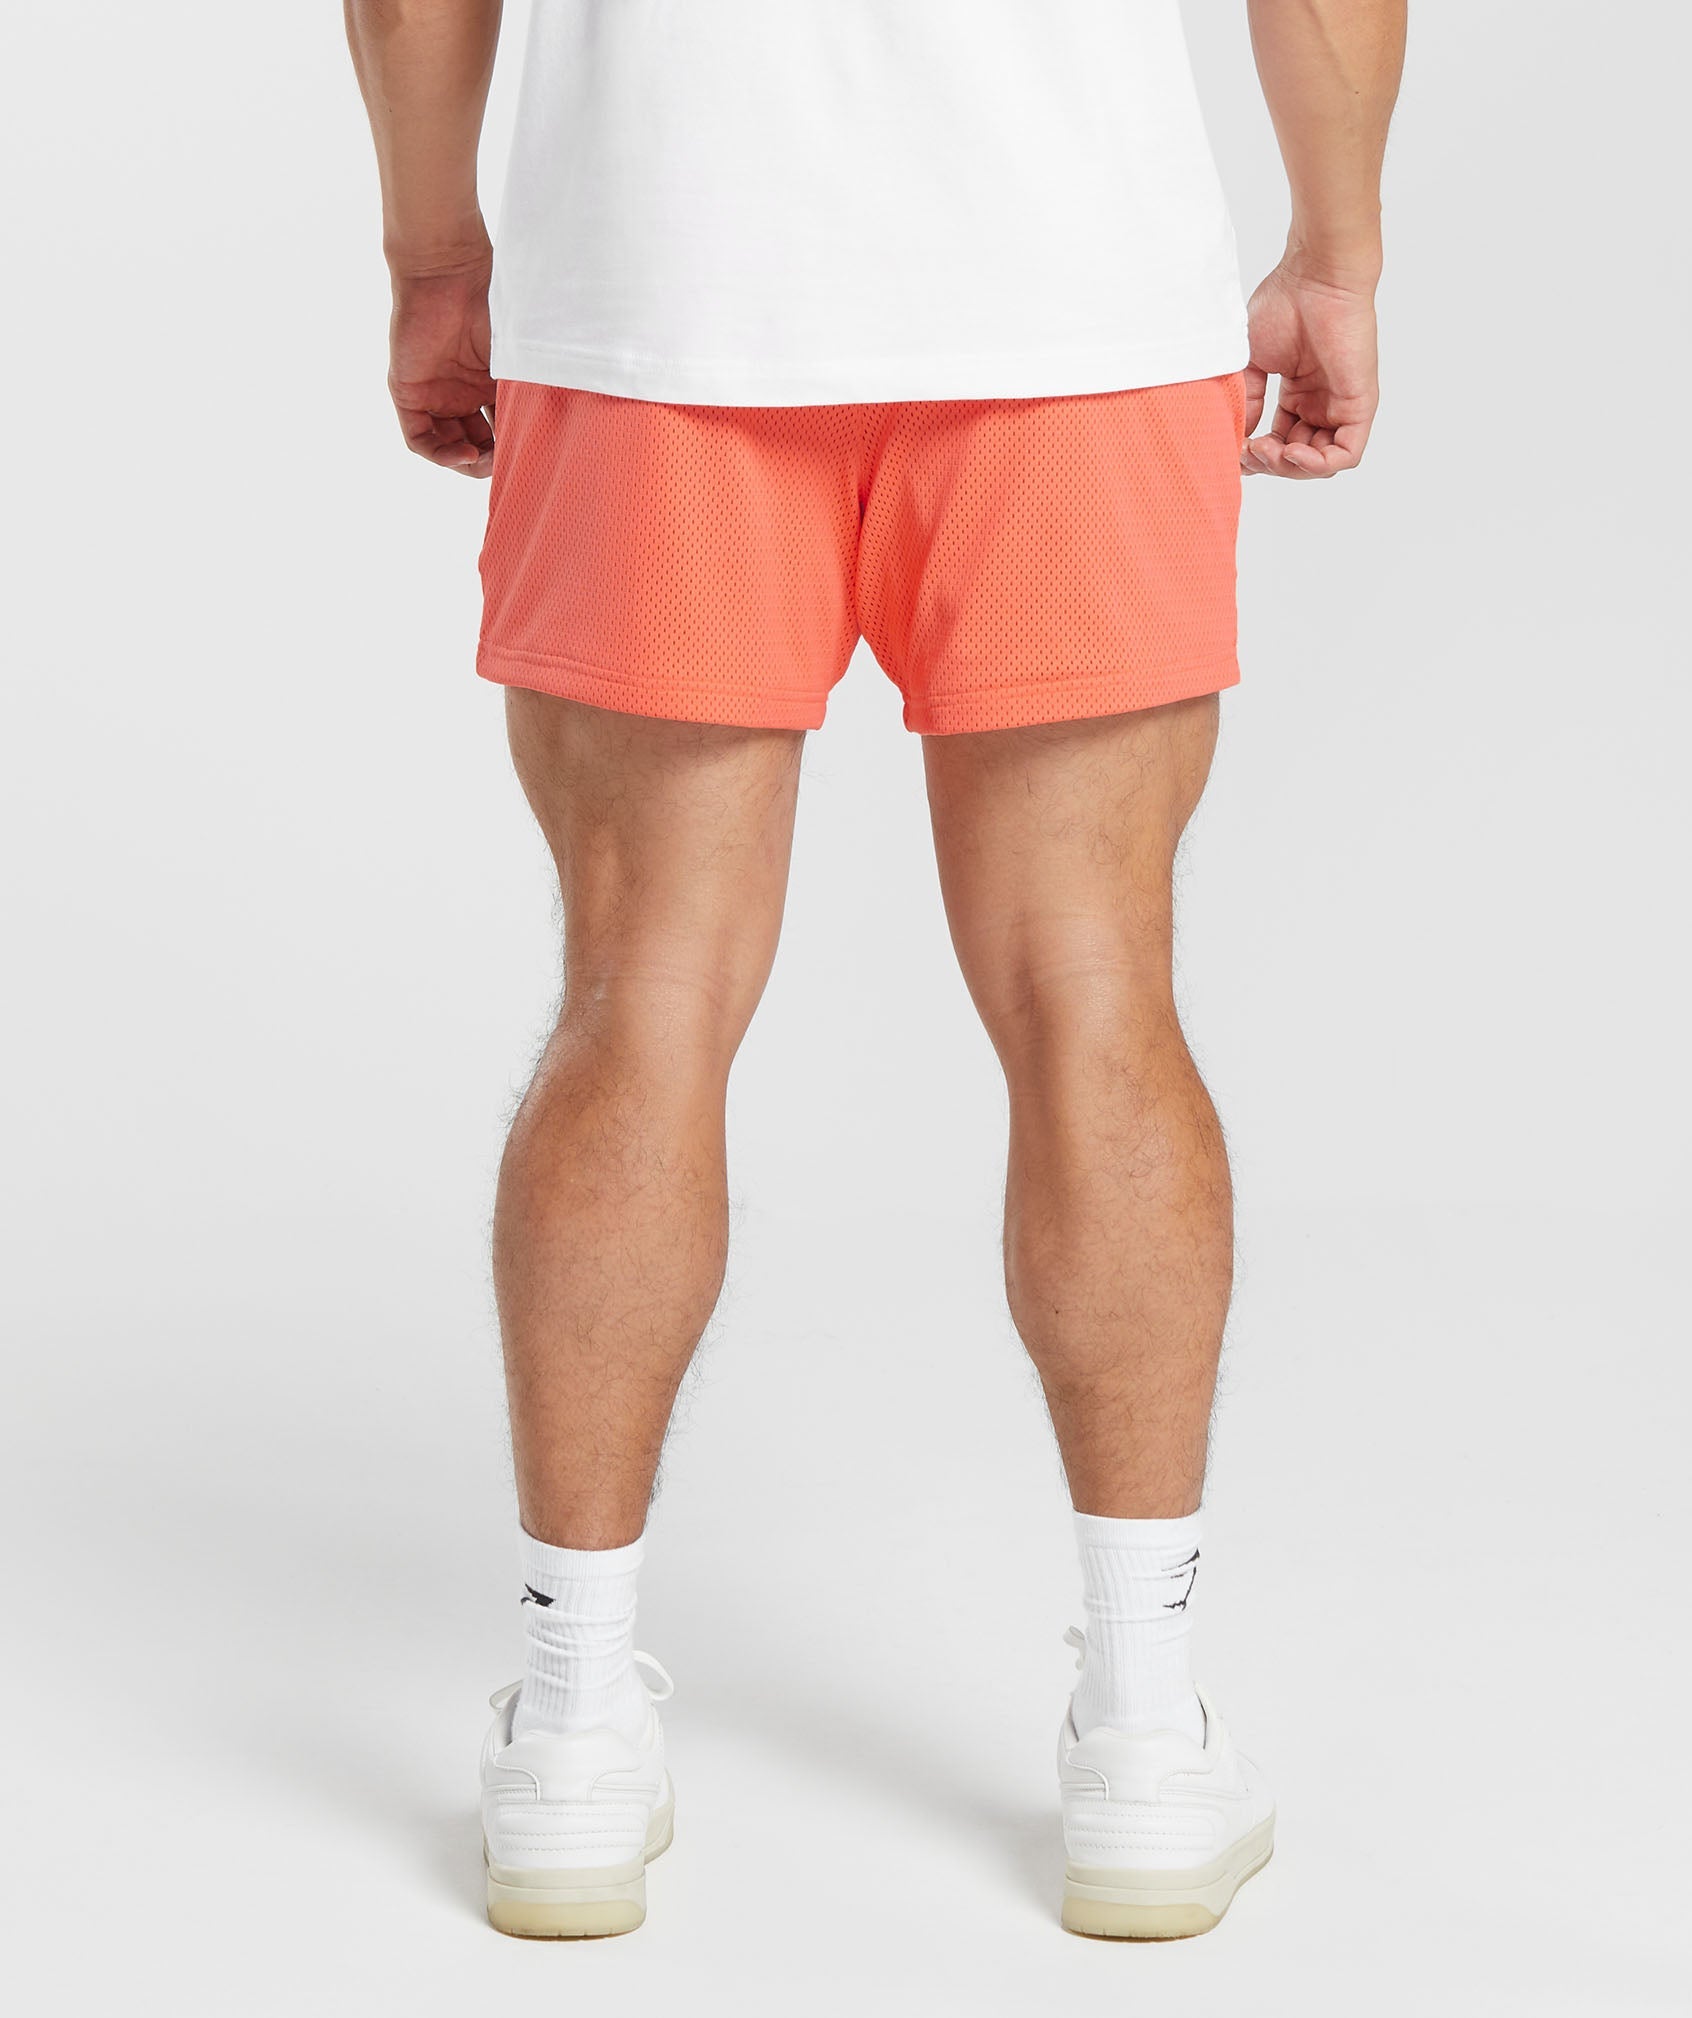 Lifting Club Mesh 5" Shorts in Solstice Orange - view 2